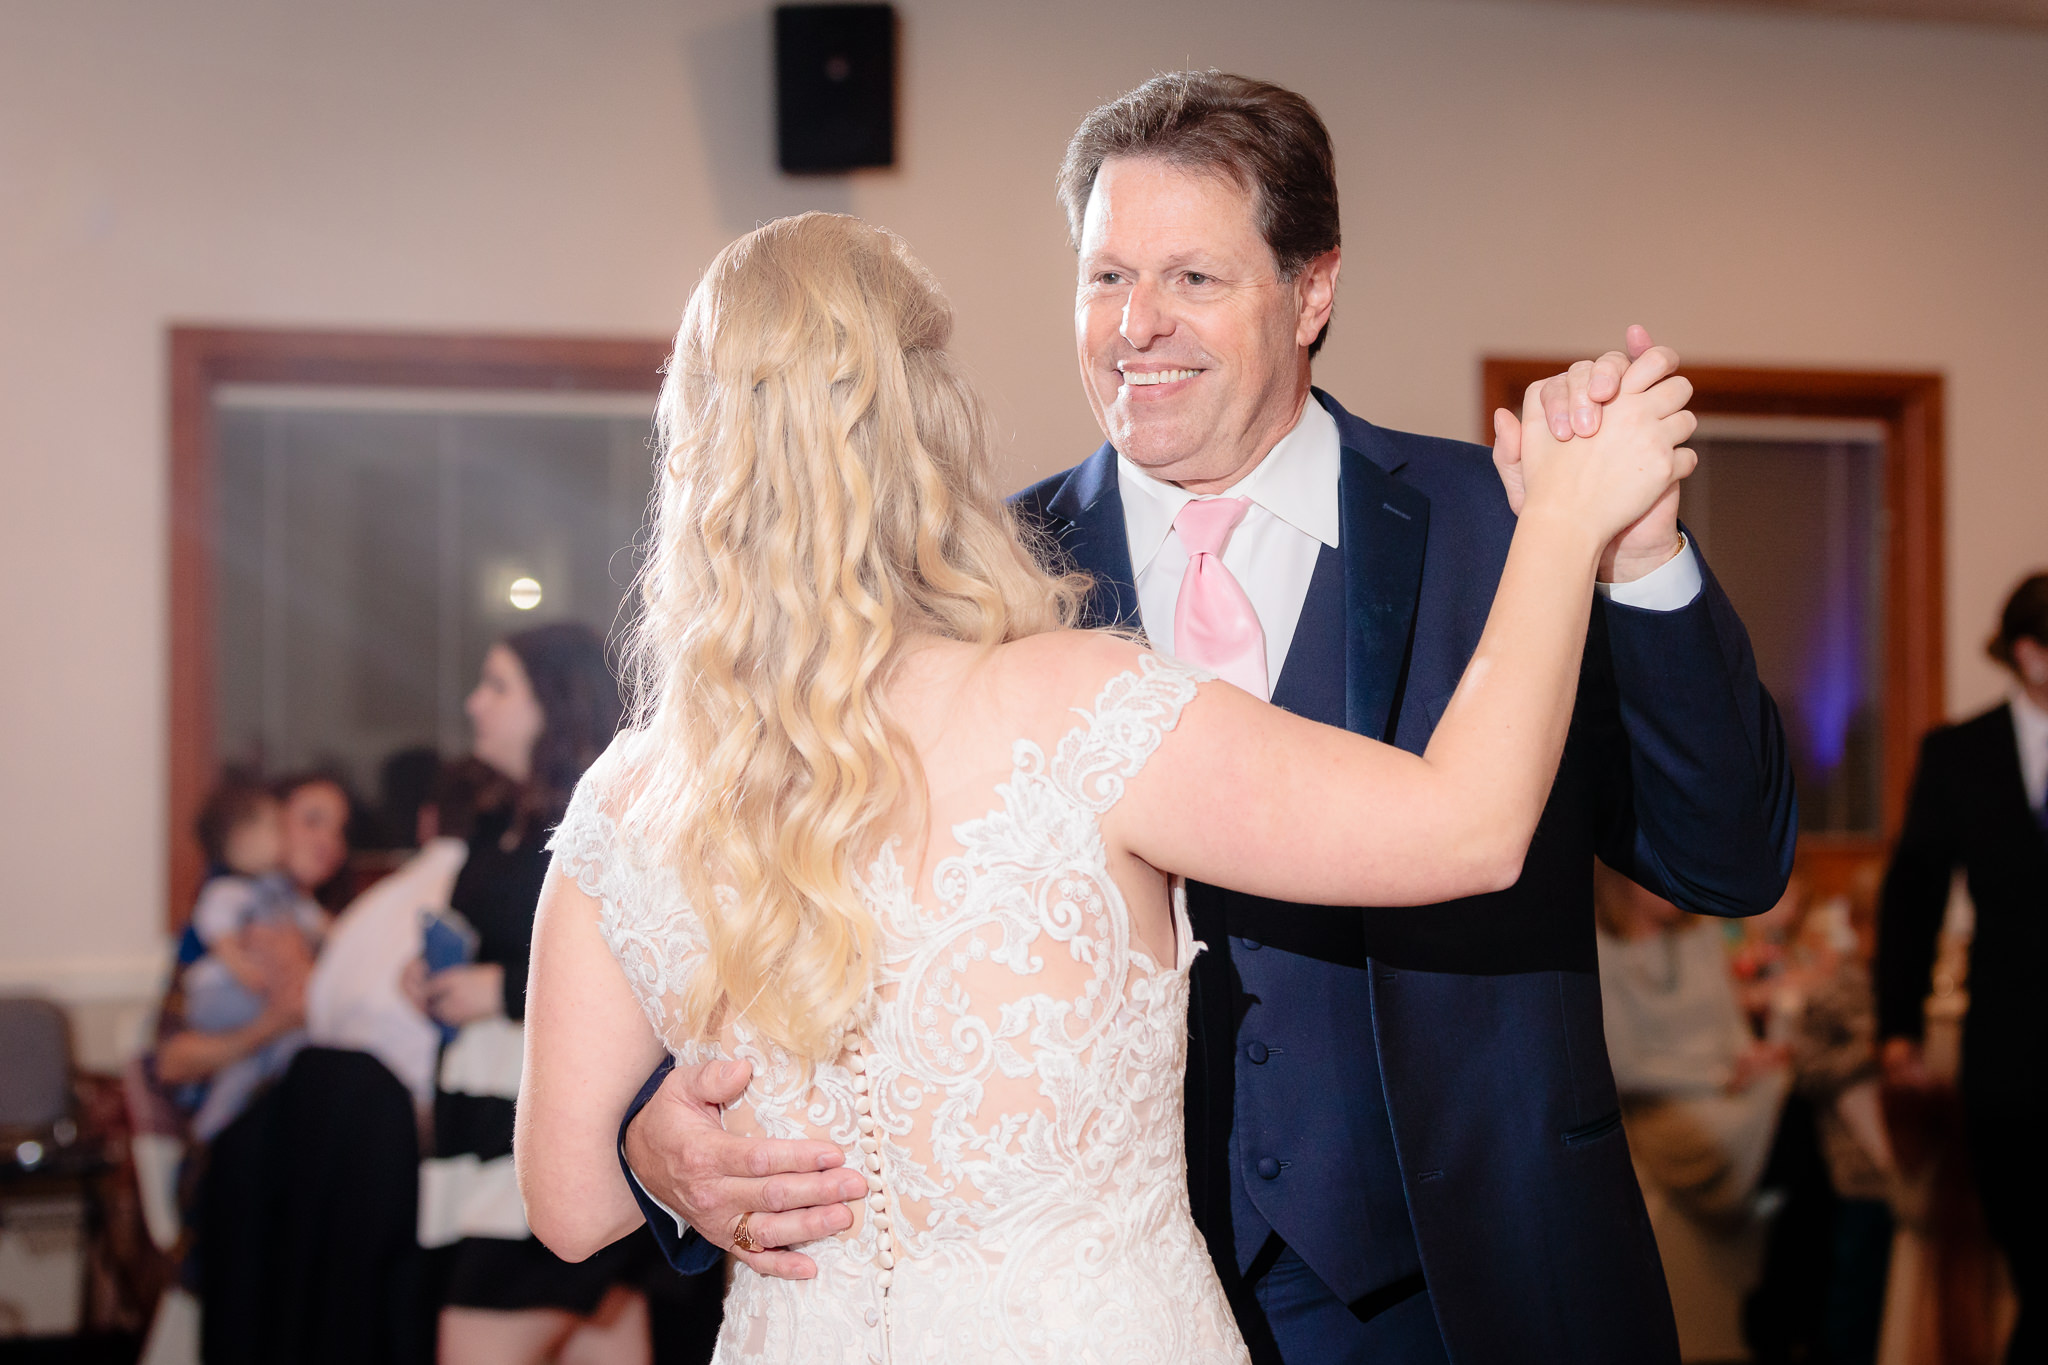 Father-daughter dance at a Riverside Landing wedding reception